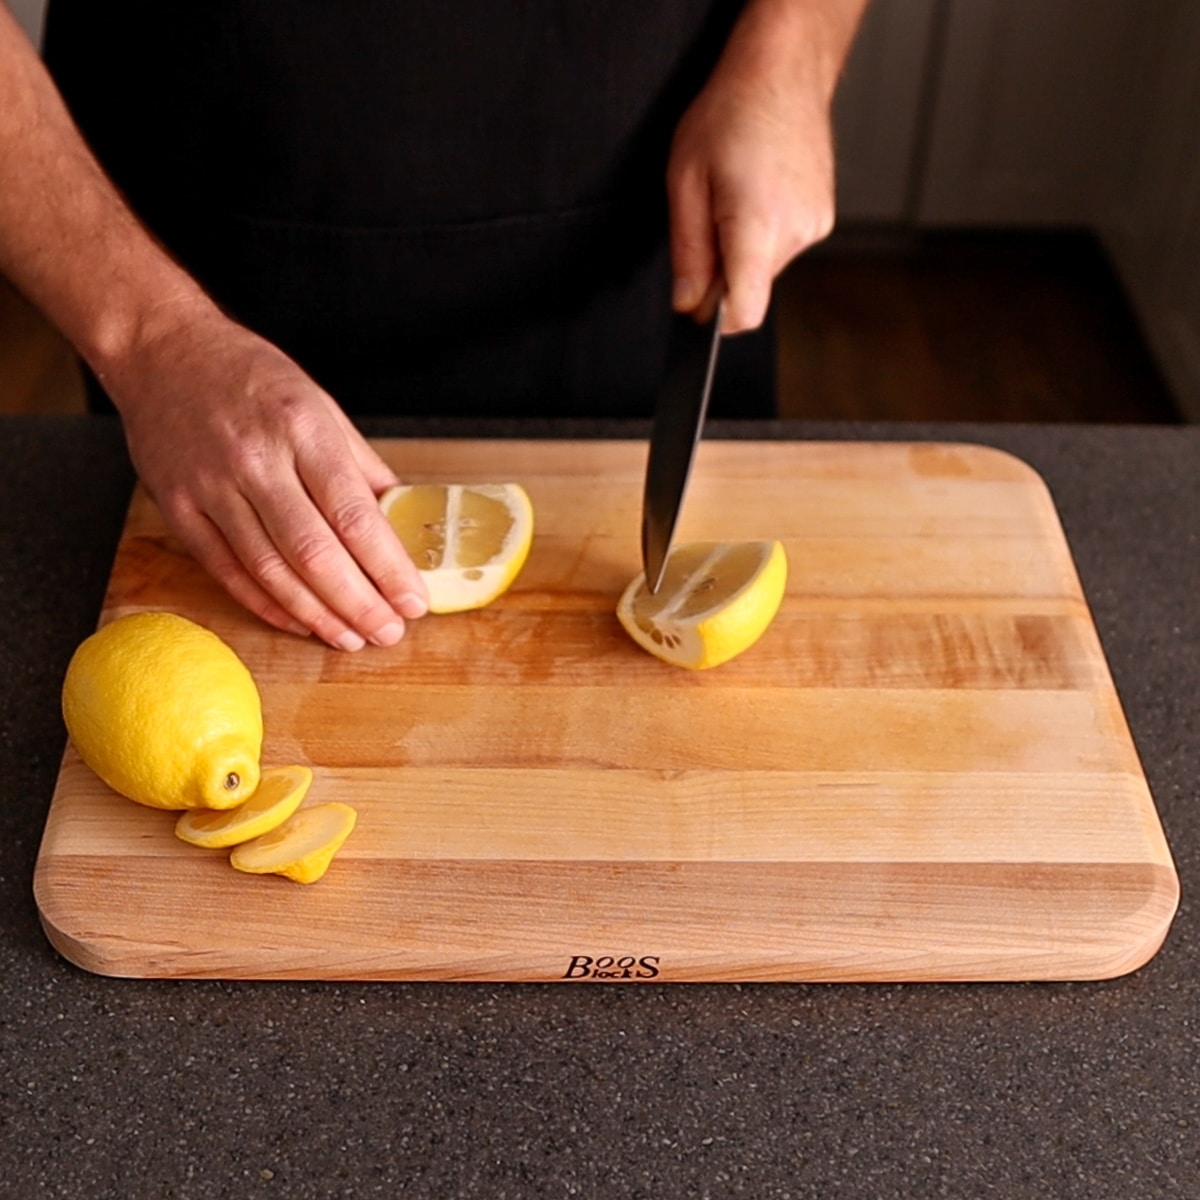 slicing the lemons